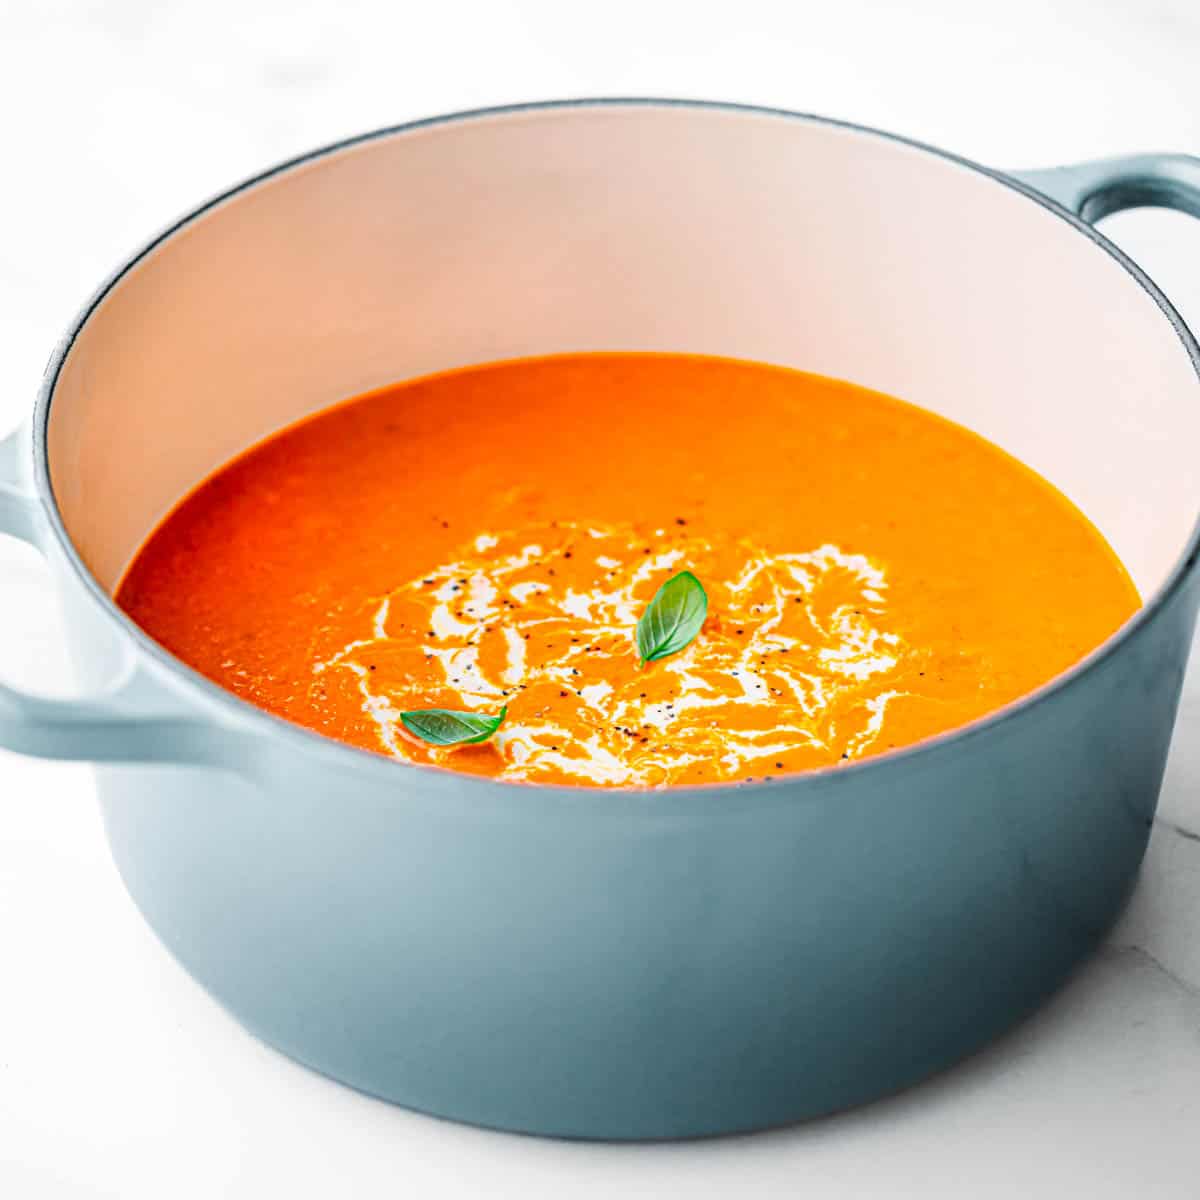 roasted garlic and tomato soup recipe. 